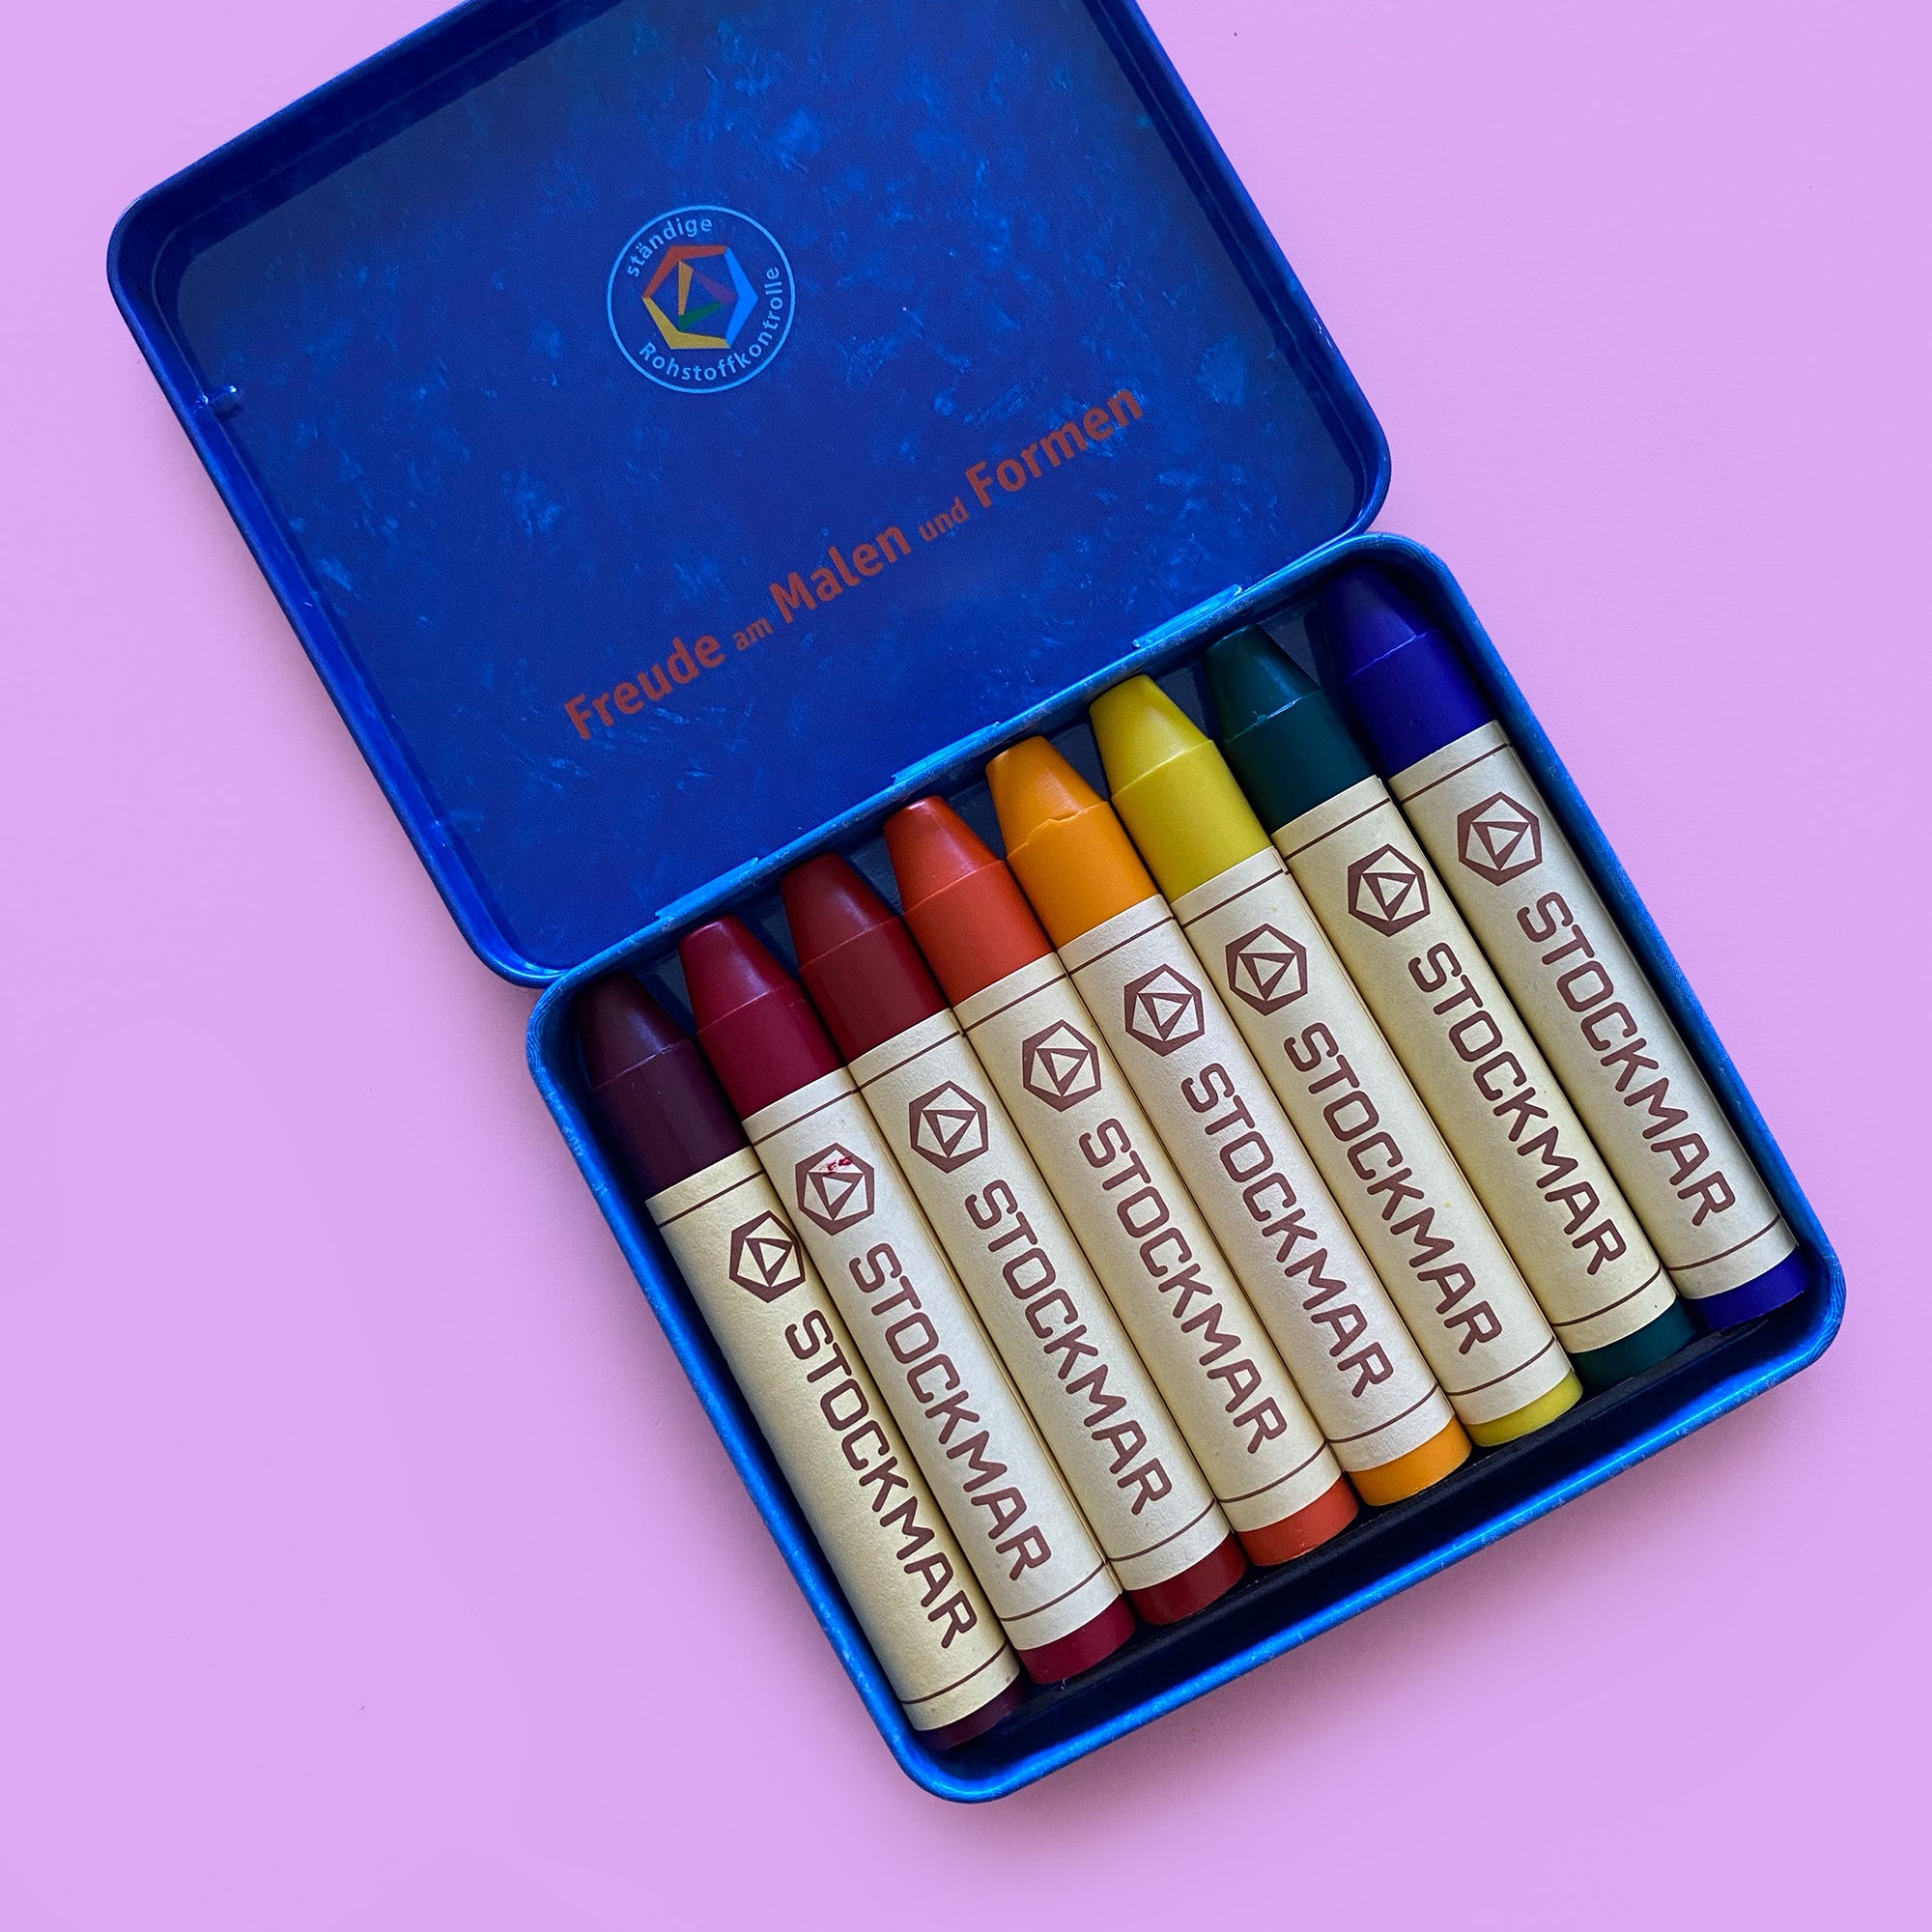 Stockmar 8 Colour Wax Crayons